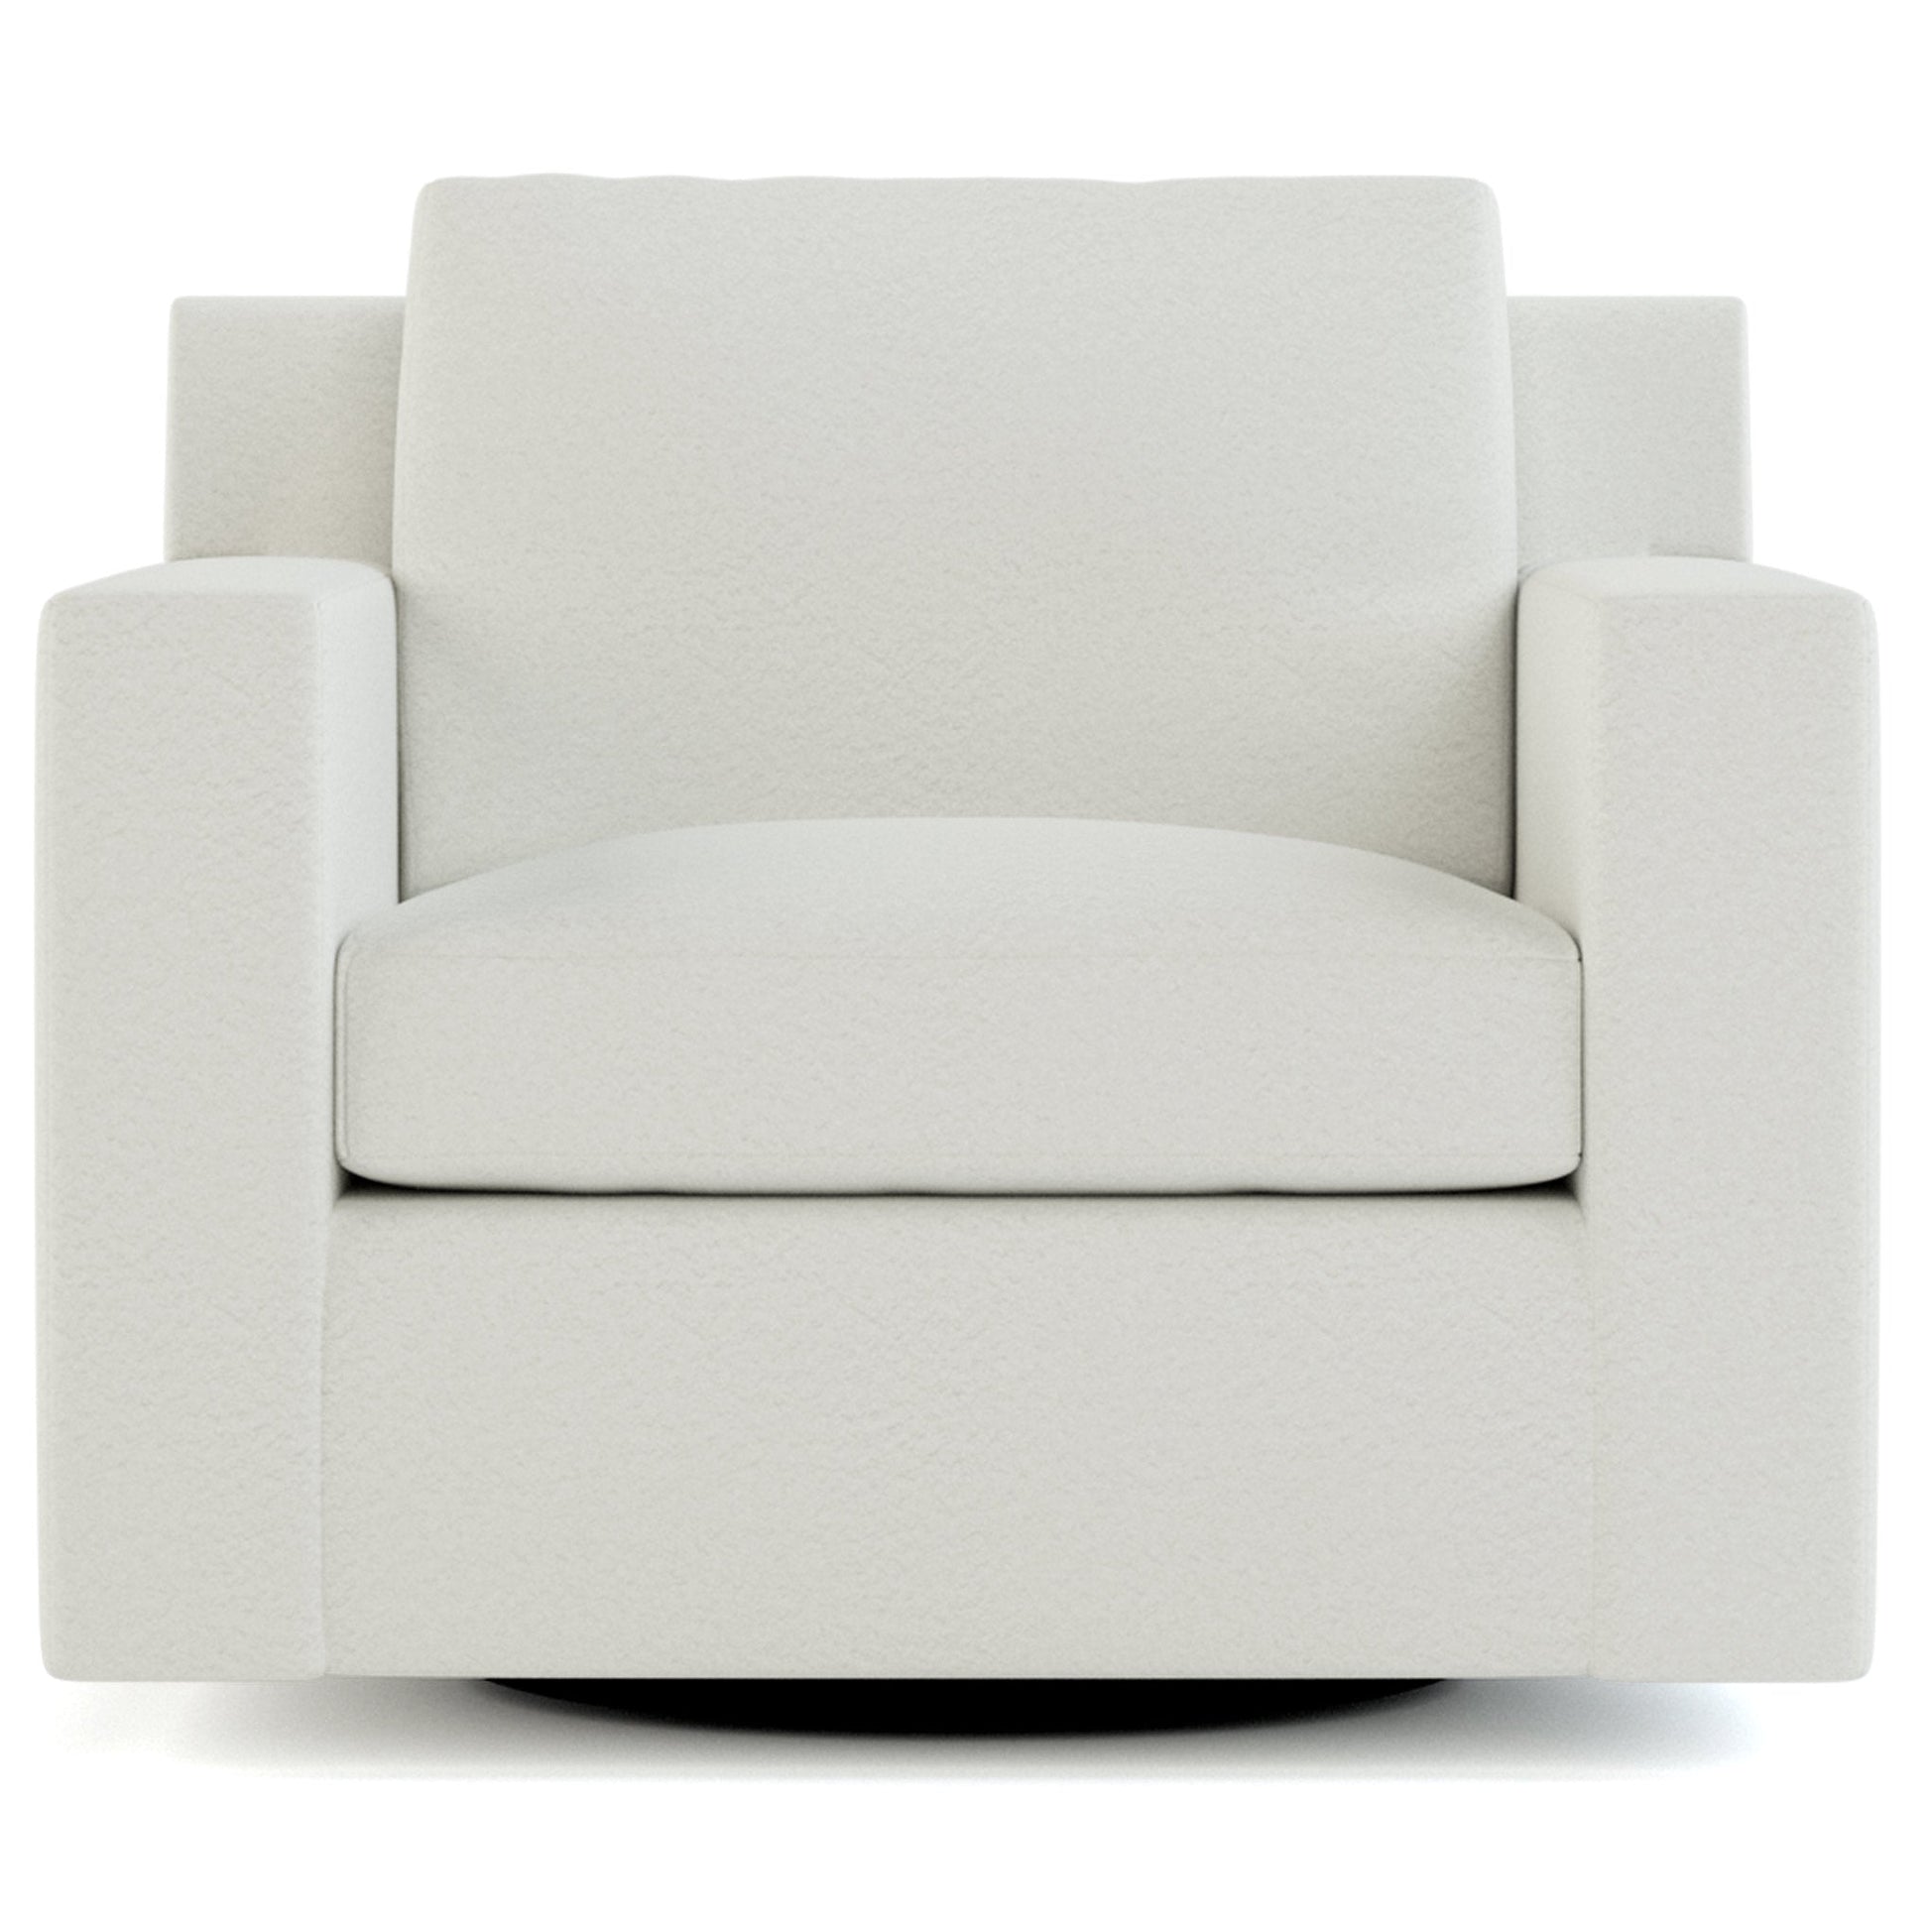 Keene Swivel Chair Fabric 4866-11